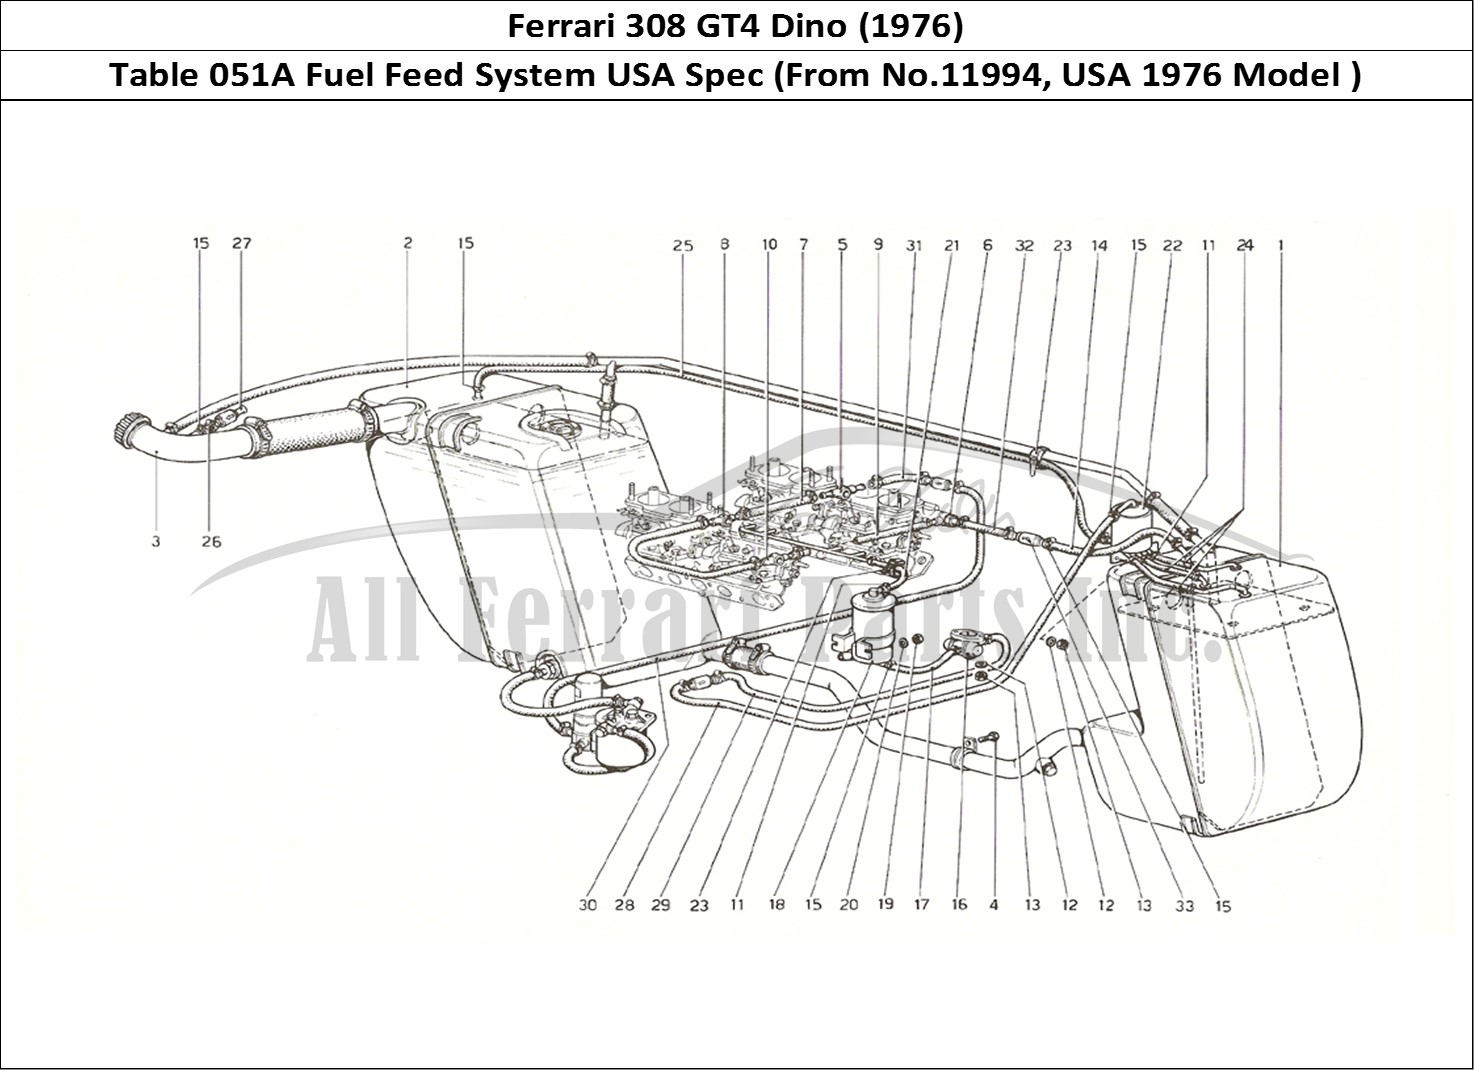 Ferrari Parts Ferrari 308 GT4 Dino (1976) Page 051 Fuel system USA Spec (Fr